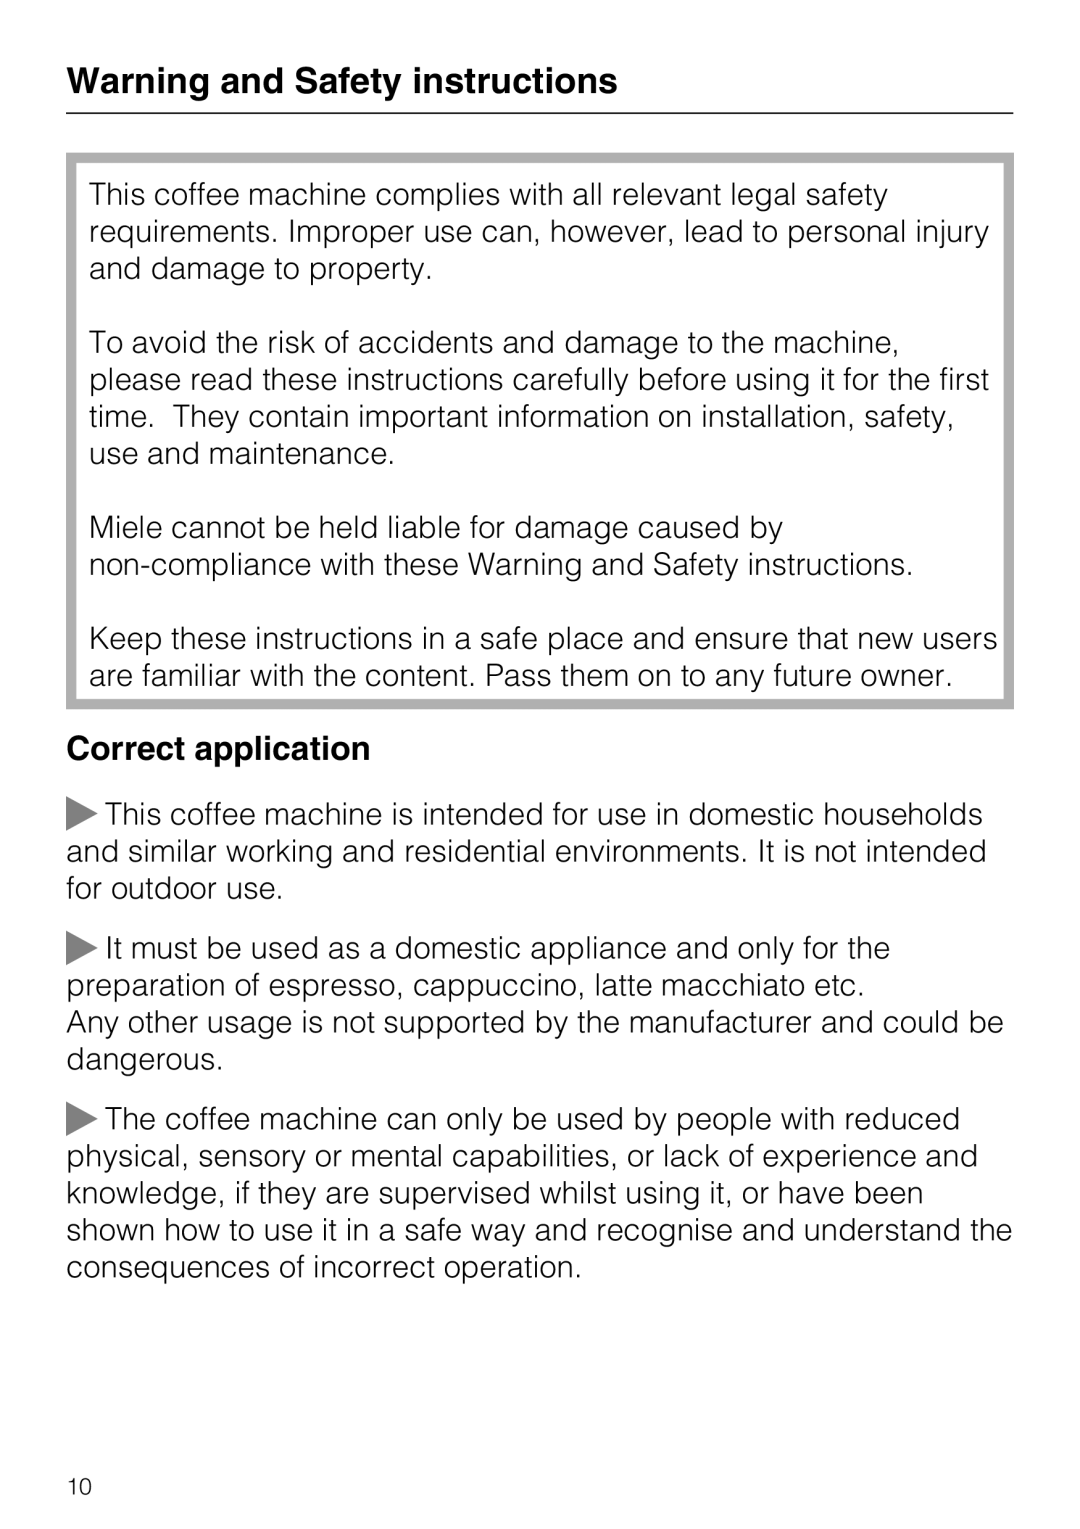 Miele CVA 6431 (C) installation instructions Warning and Safety instructions, Correct application 